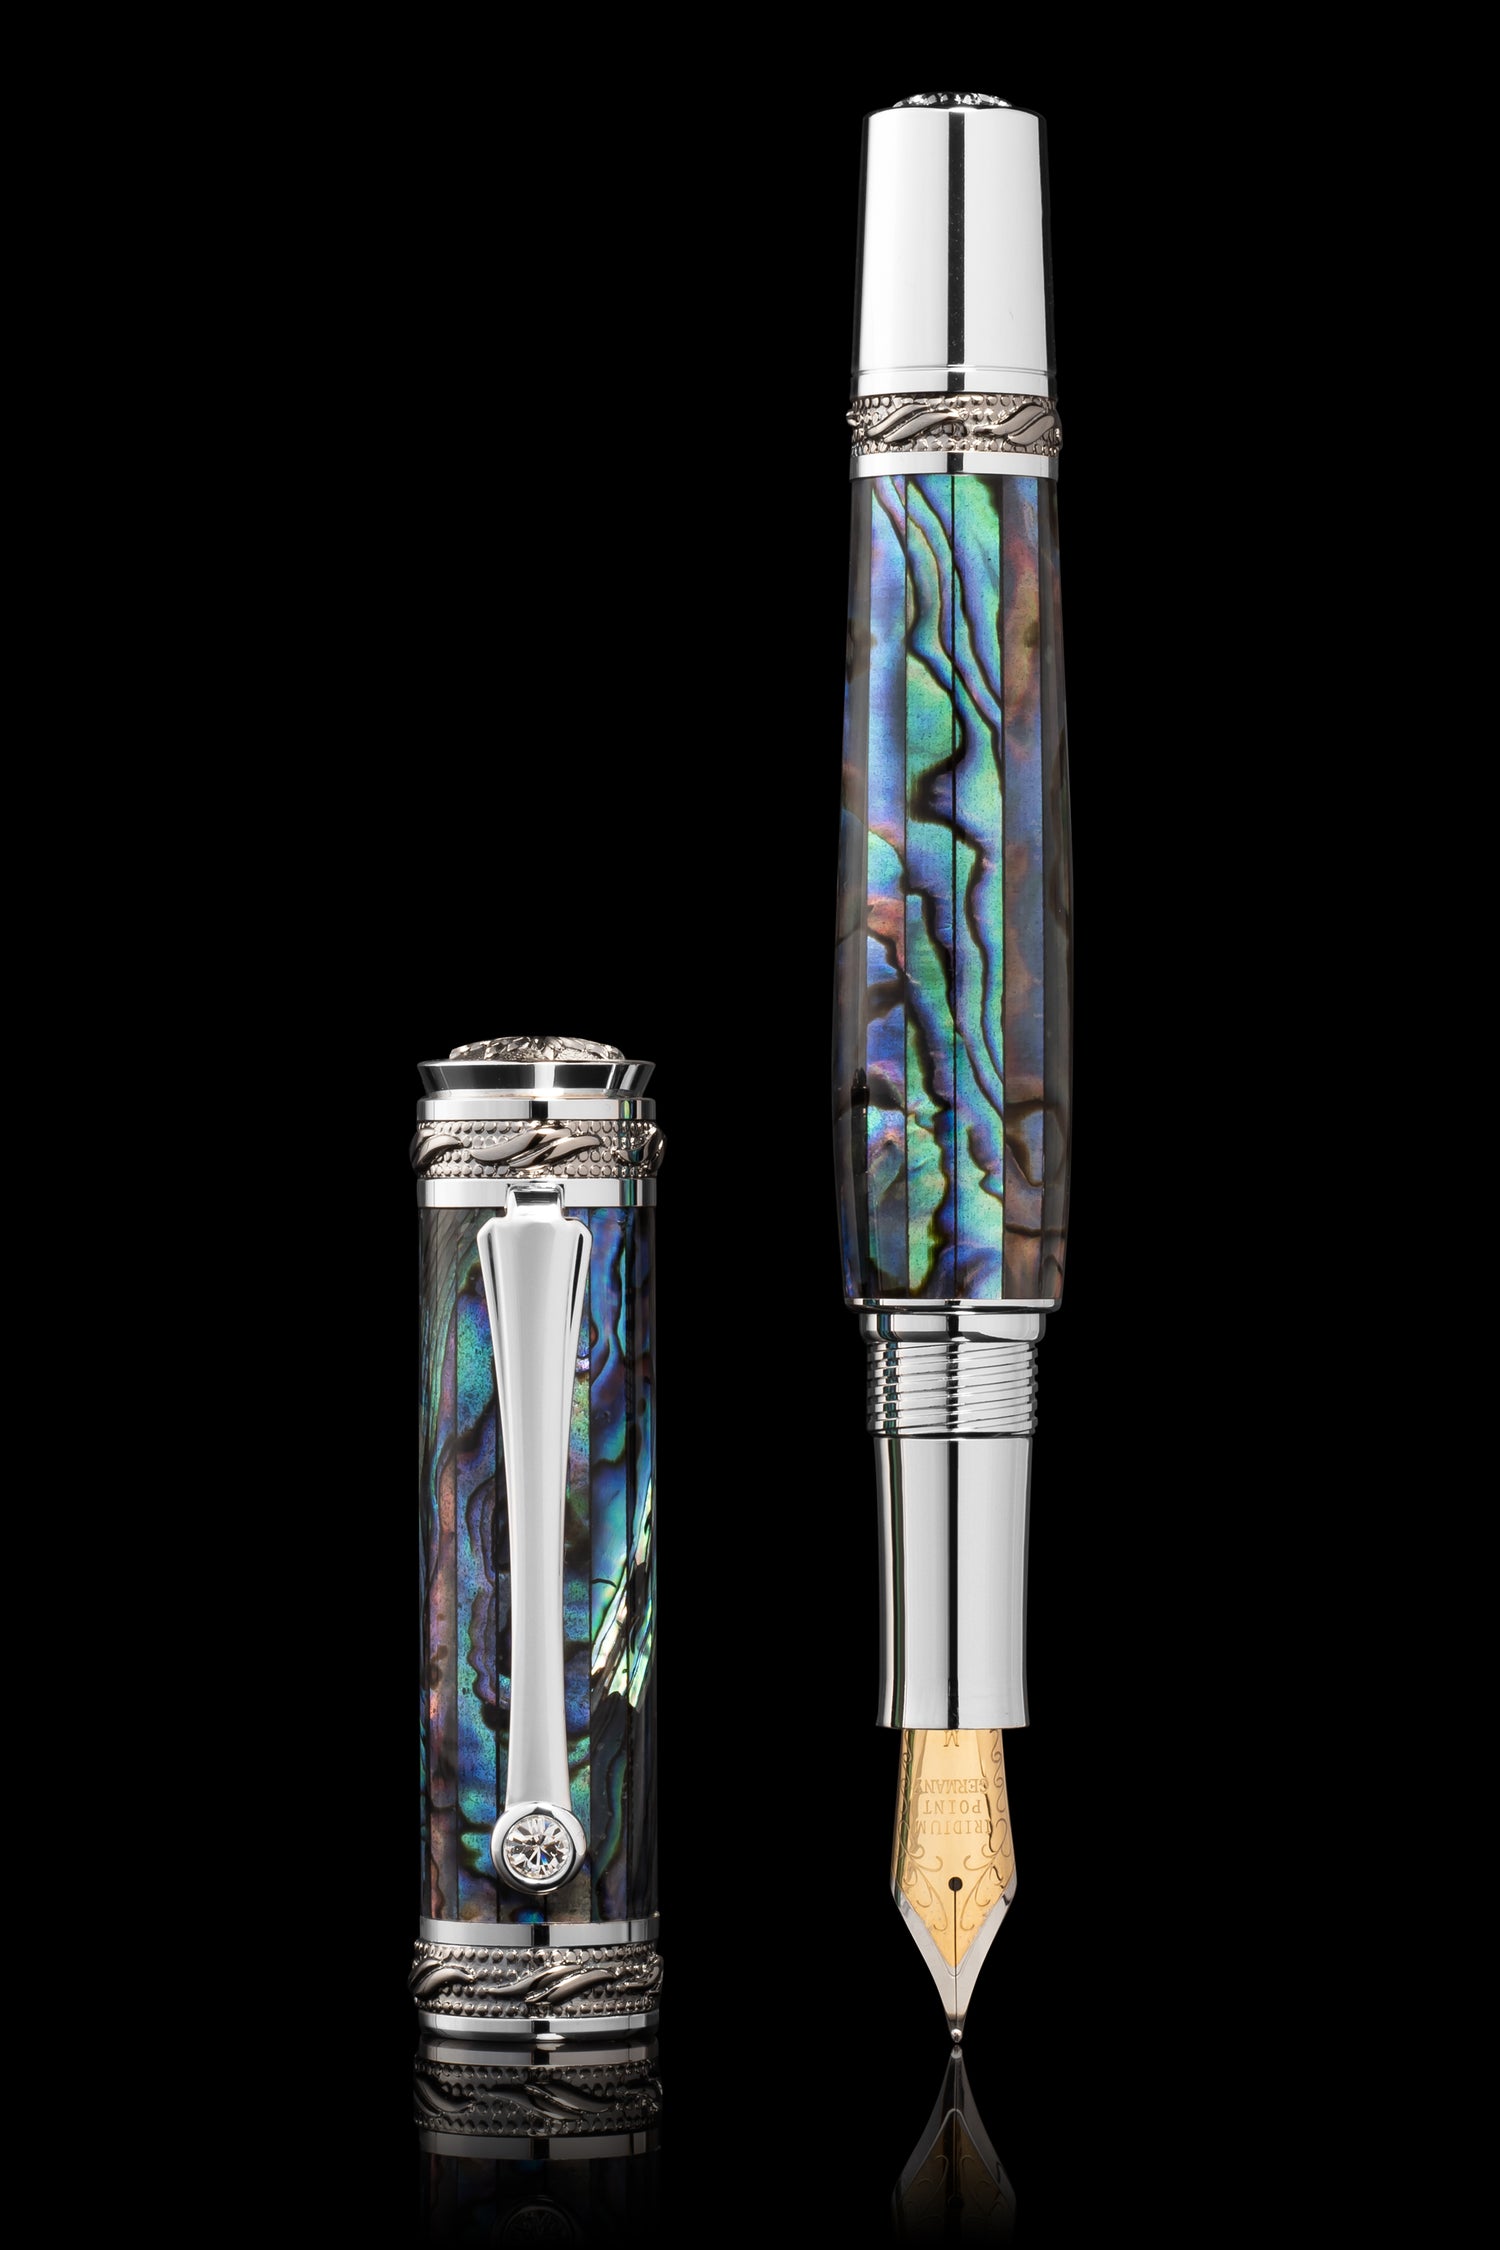 Pitchman - Tycoon Blue Fountain Pen - Nice Pen - Fountain Pens